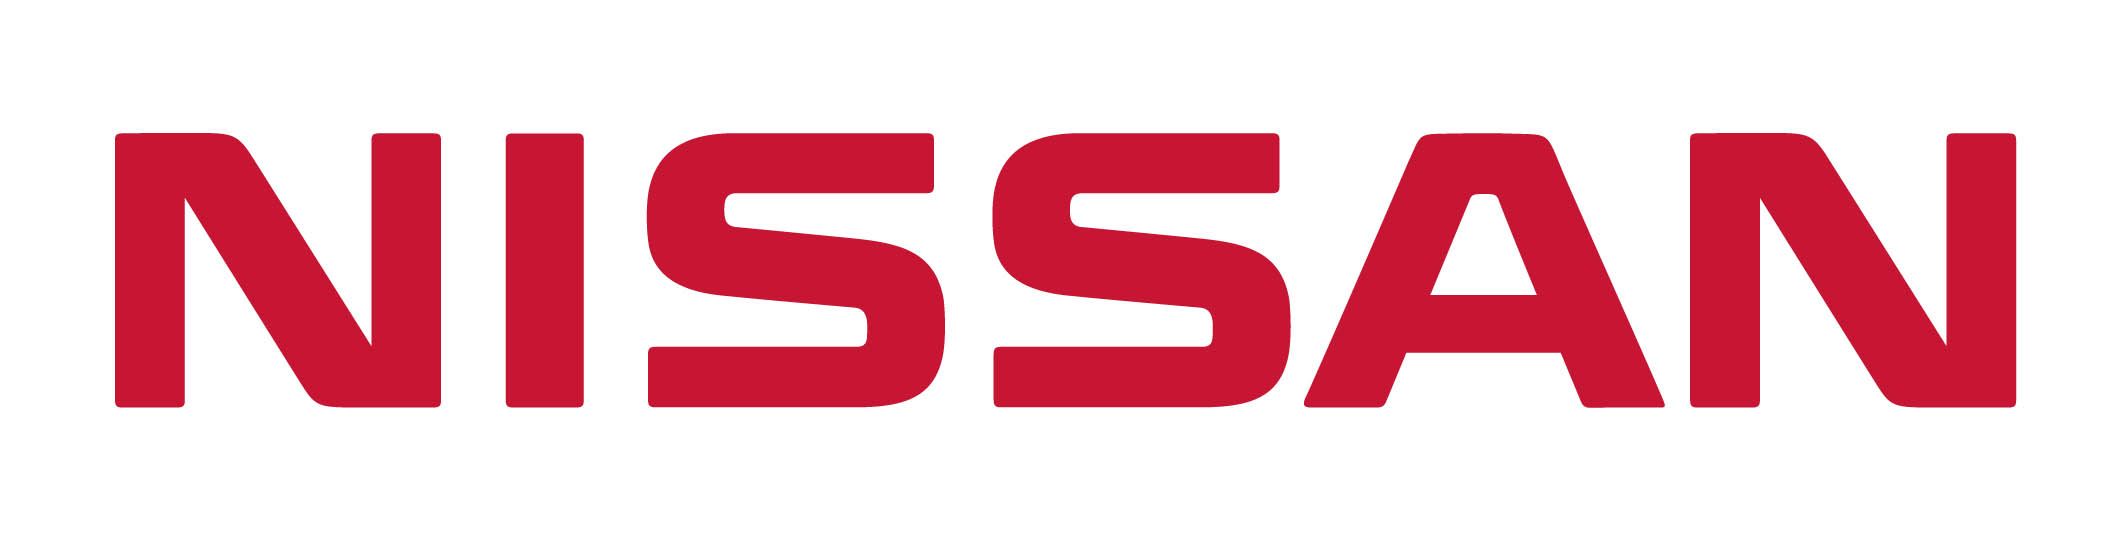 Nissan_logo.3